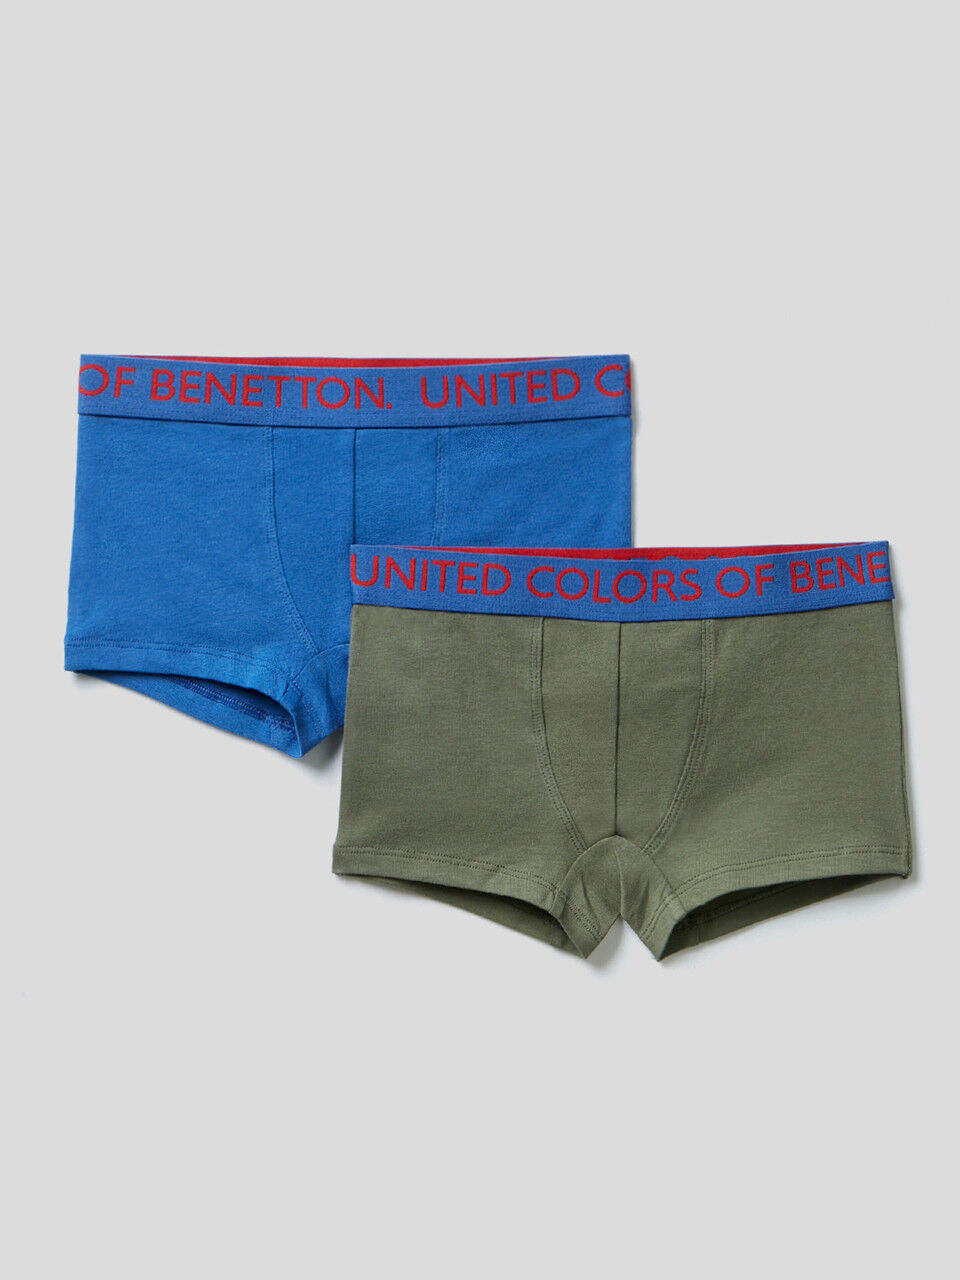 Fire Boy Underwear Wholesale Store, Save 67% | jlcatj.gob.mx